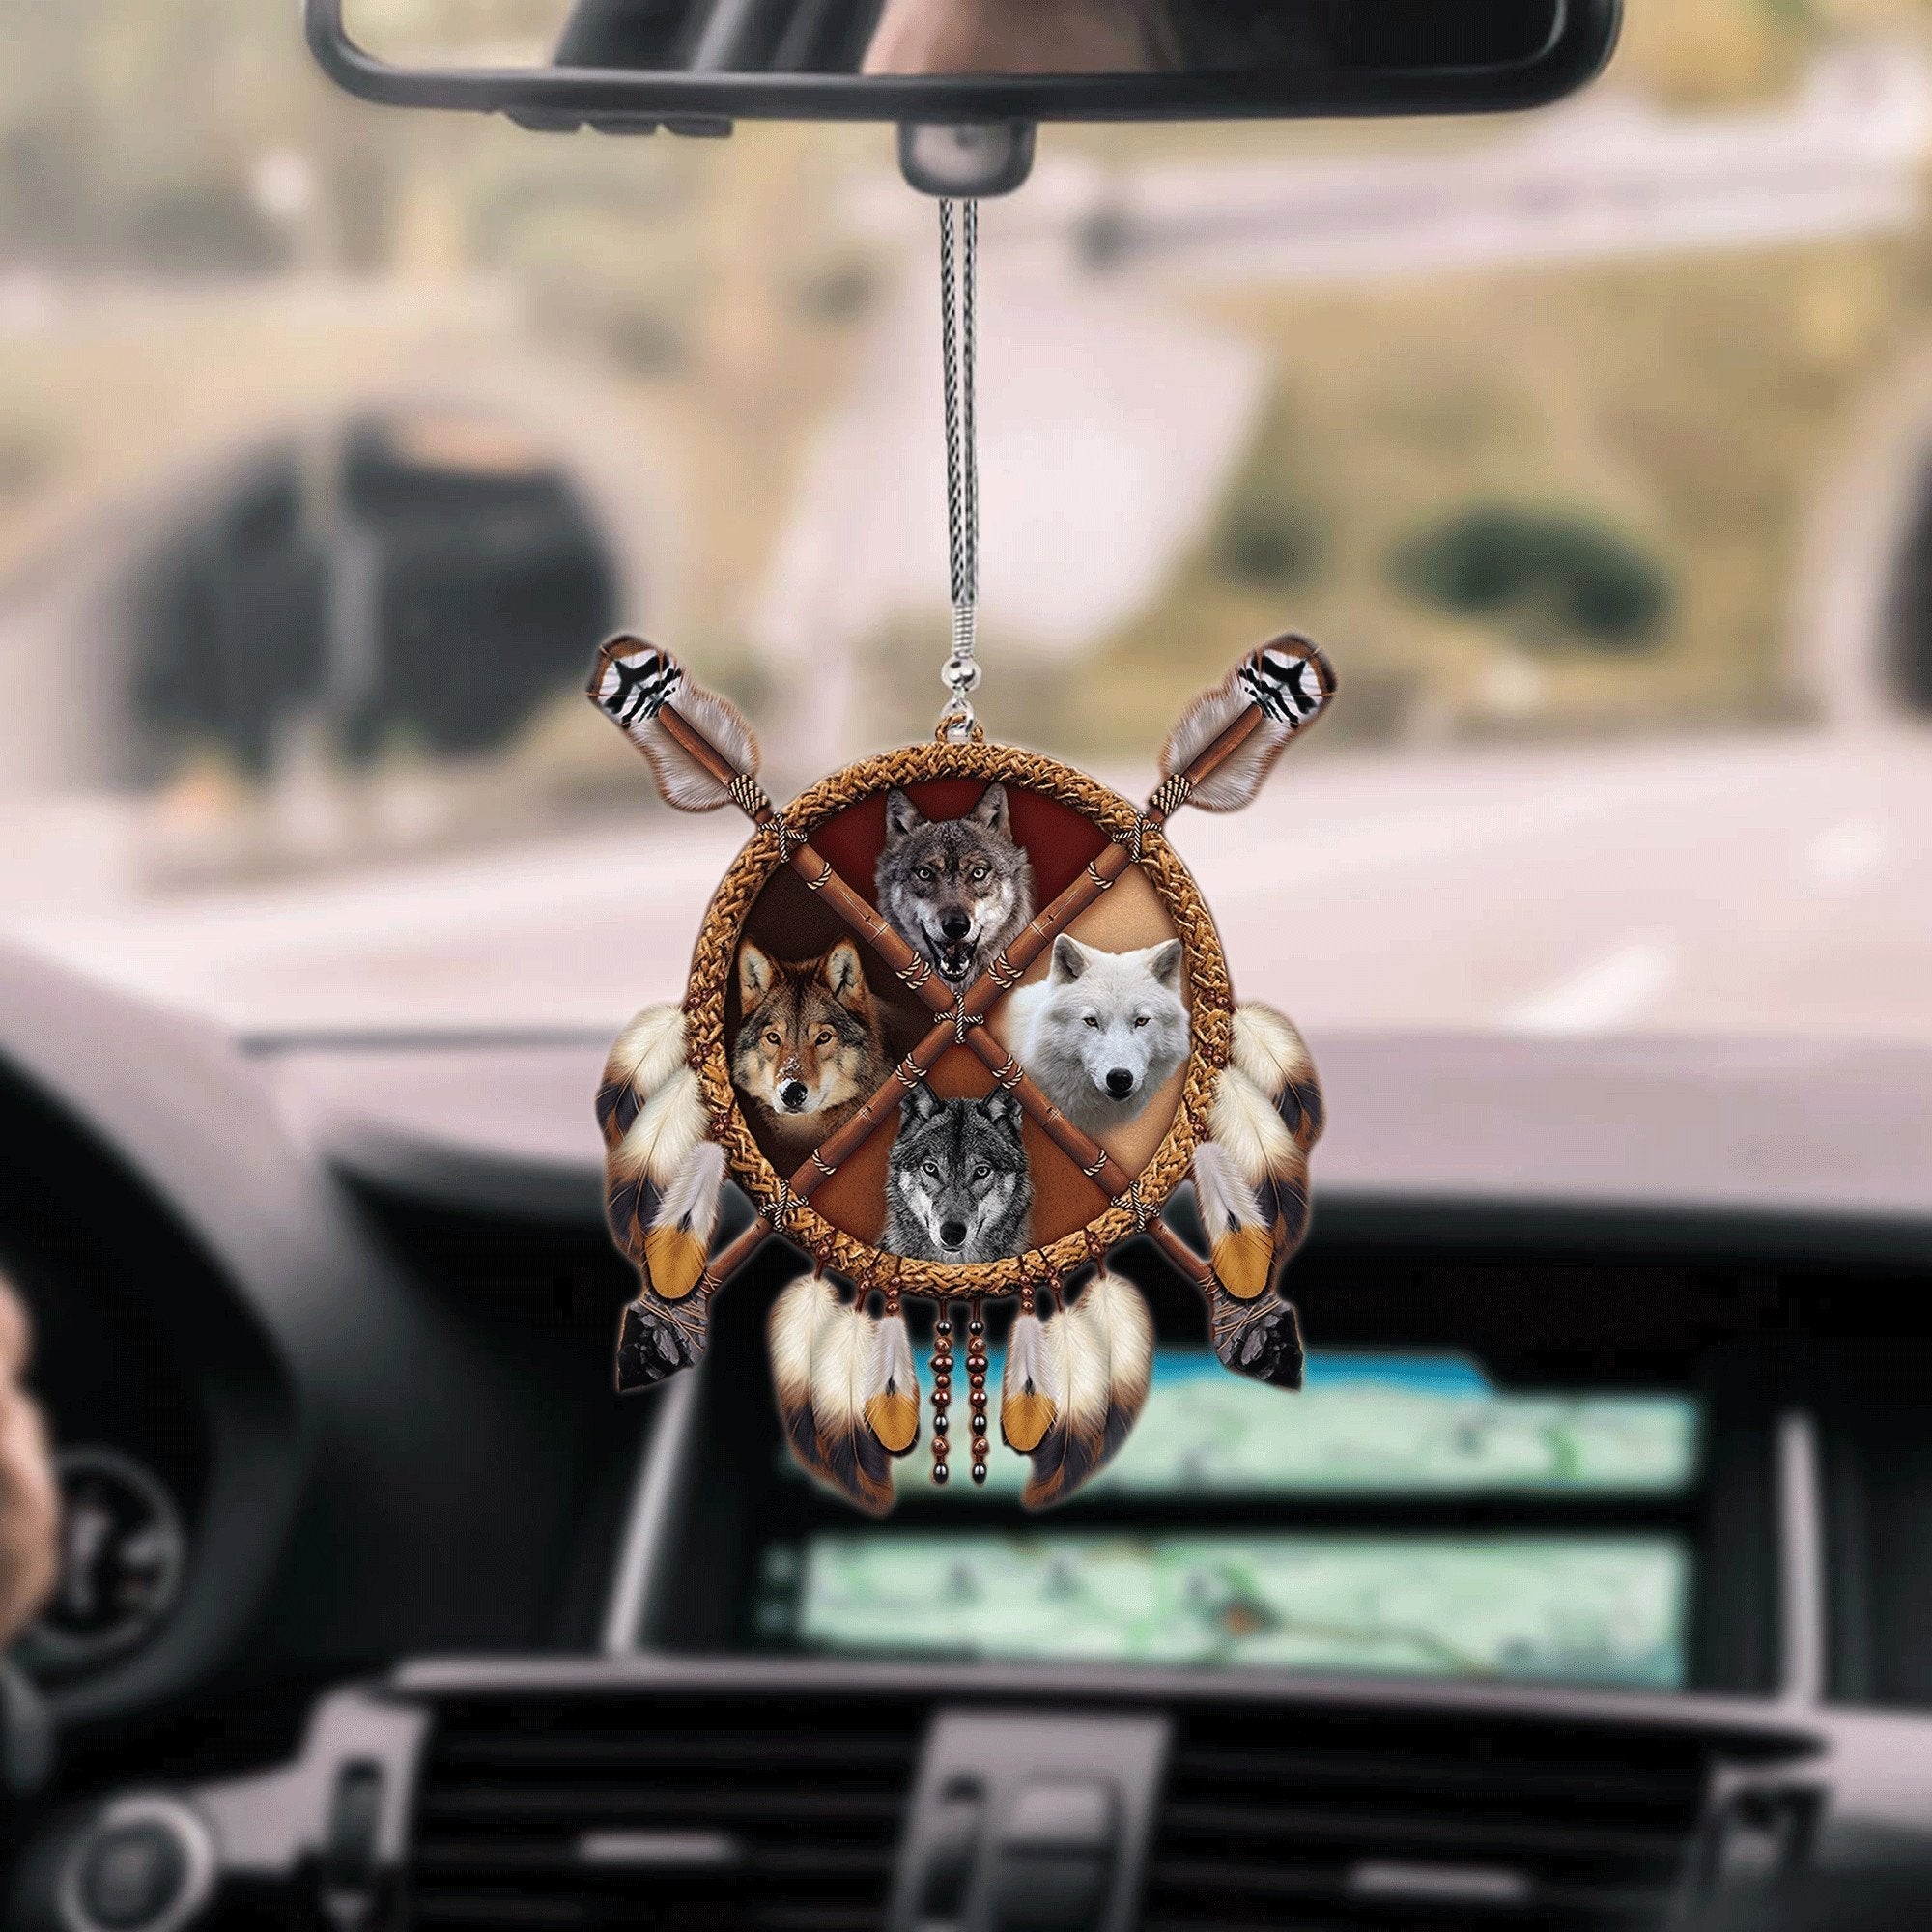 Native American Car Hanging Ornament/ Hanging Ornament For Car